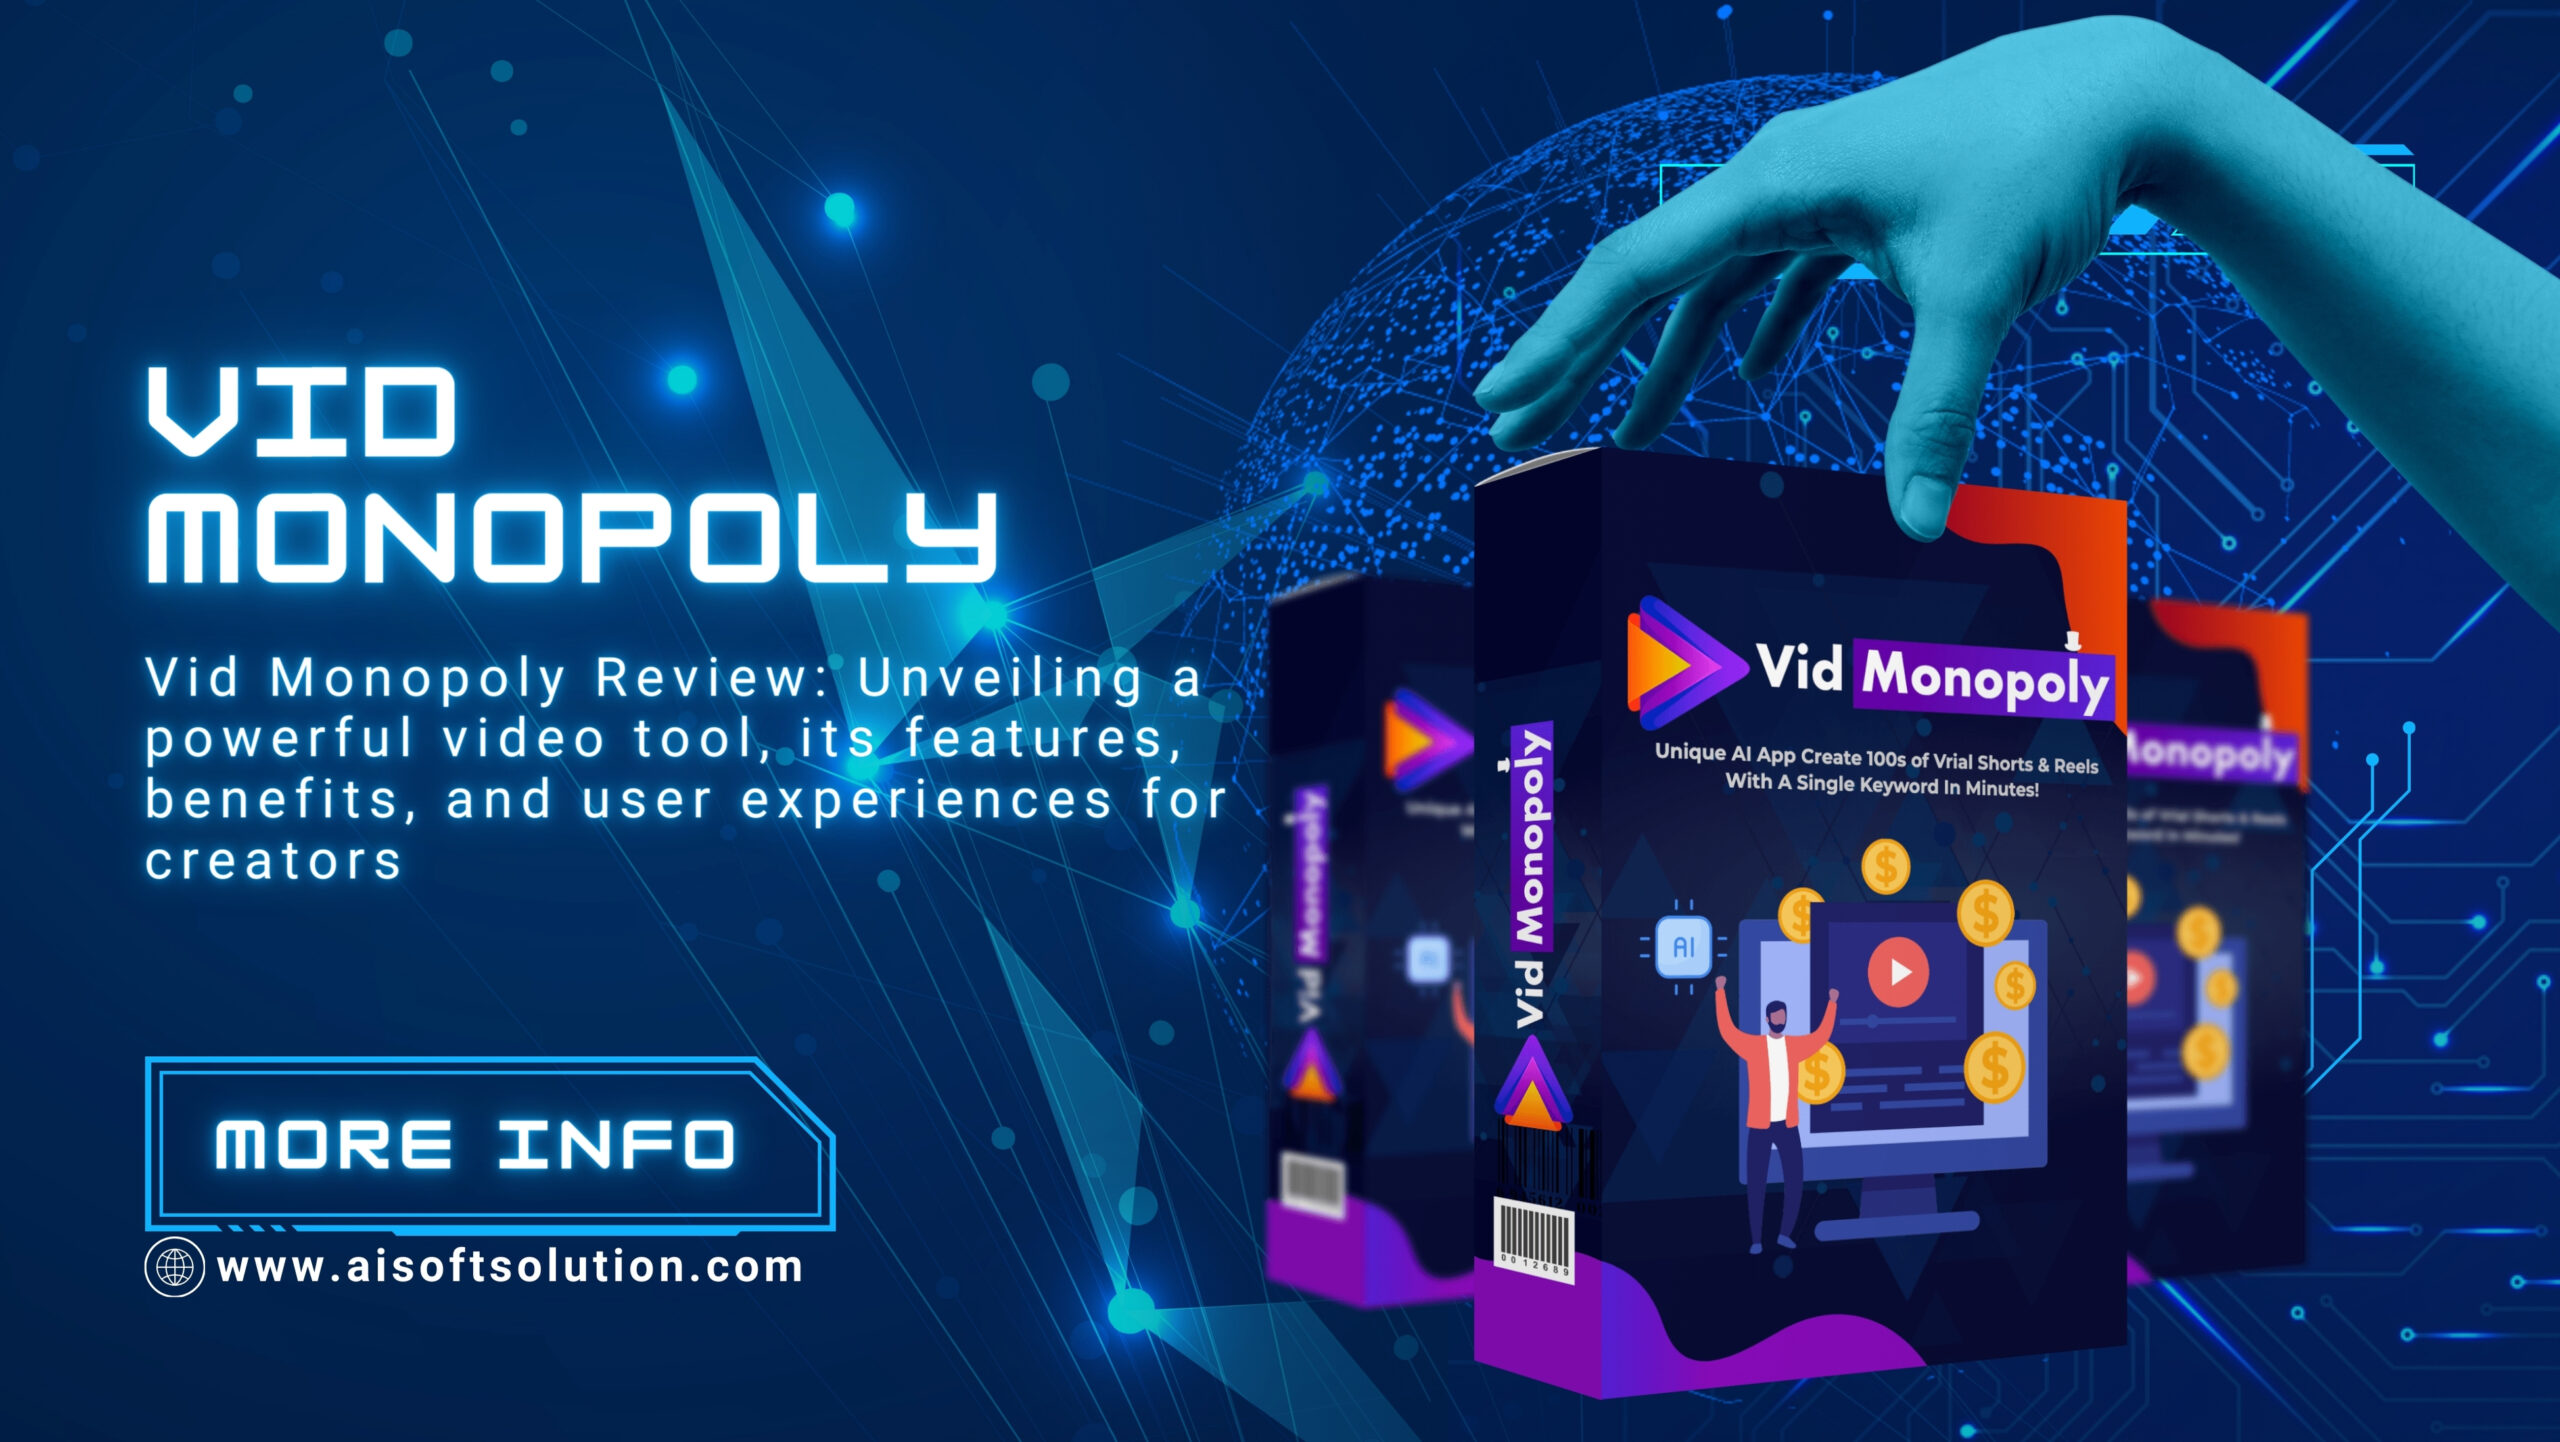 Vid Monopoly Review: Top Short Video Maker